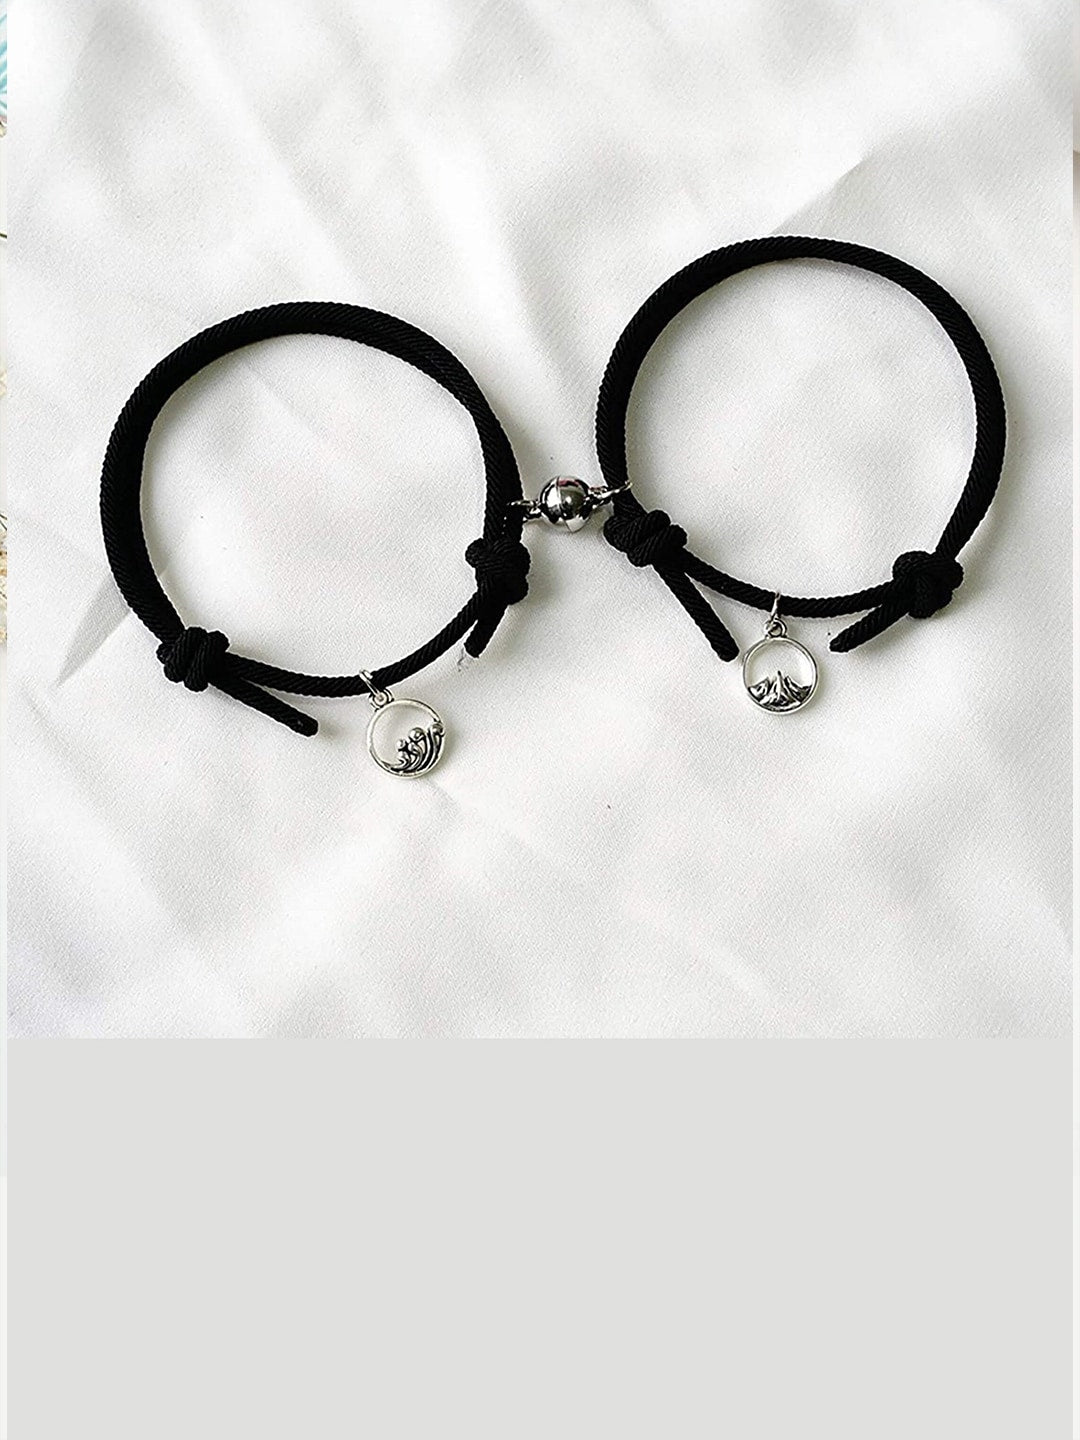 EL REGALO Men Set of 2 Black & Silver-Toned Antique Charm Bracelet - for Men
Style ID: 17047704